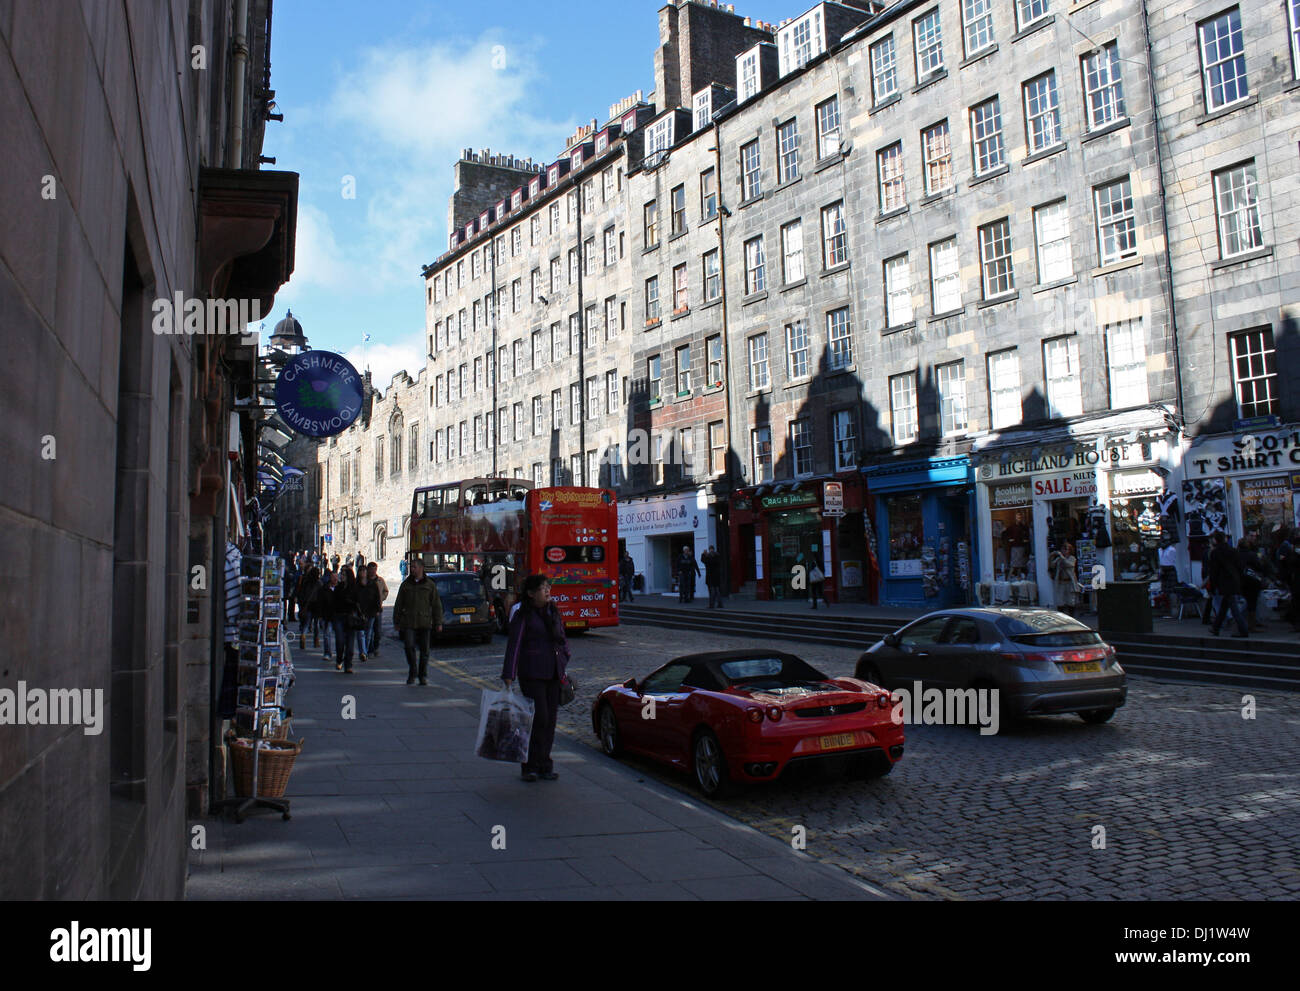 Scotland: Historic centre of Edinburgh (Royal Mile) Stock Photo